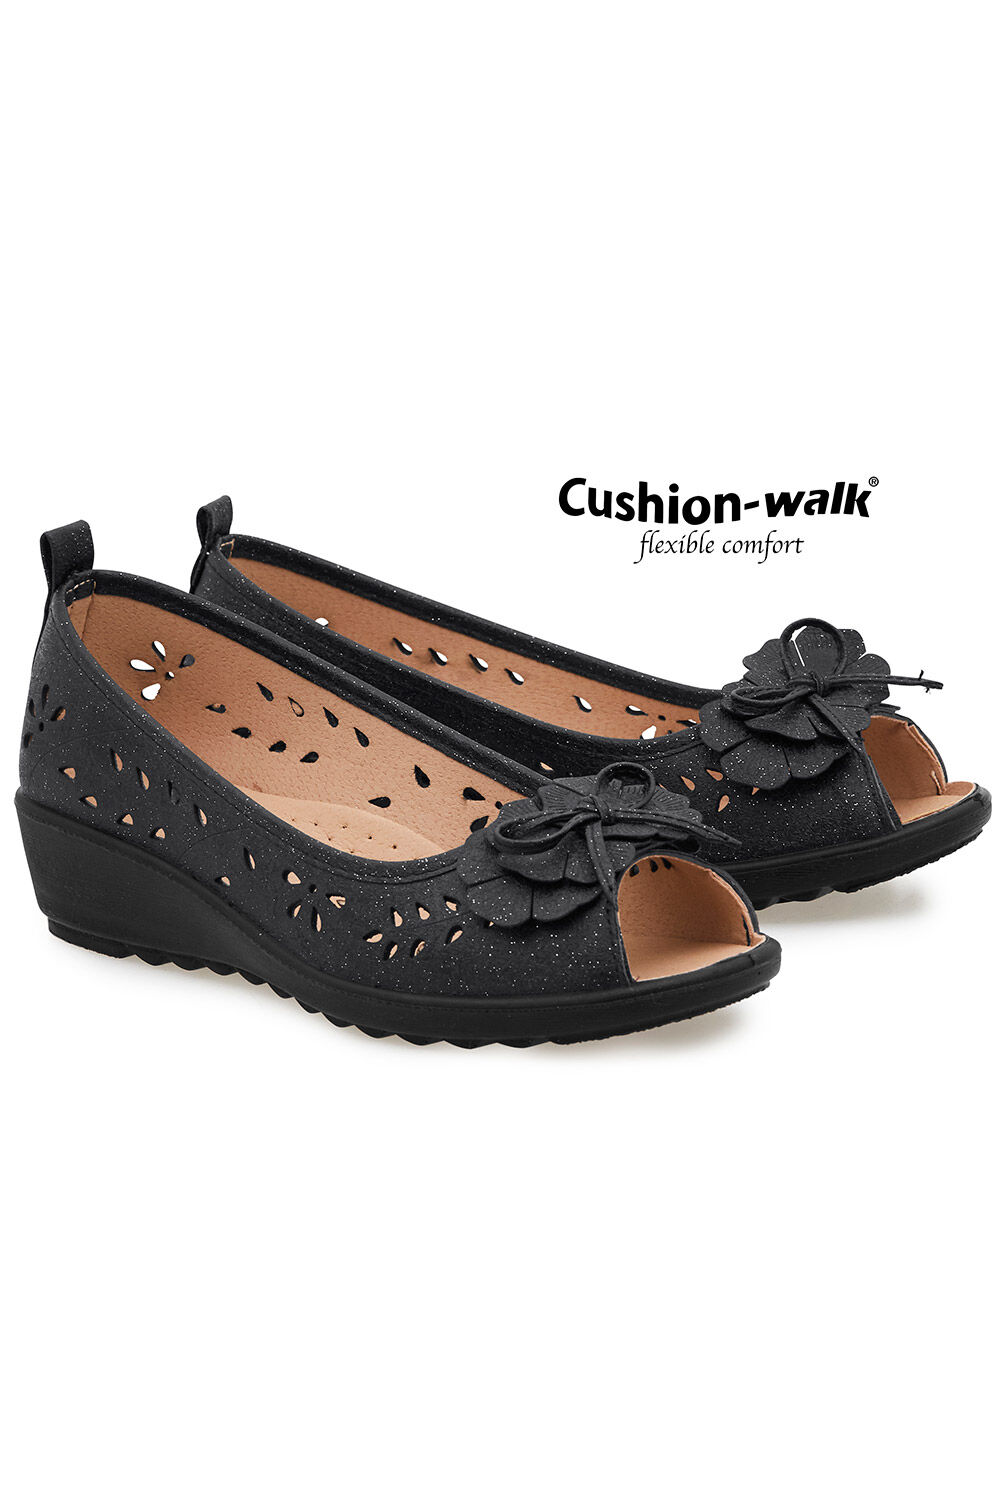 Cushion Walk Womens Slip On Shoes Flexible